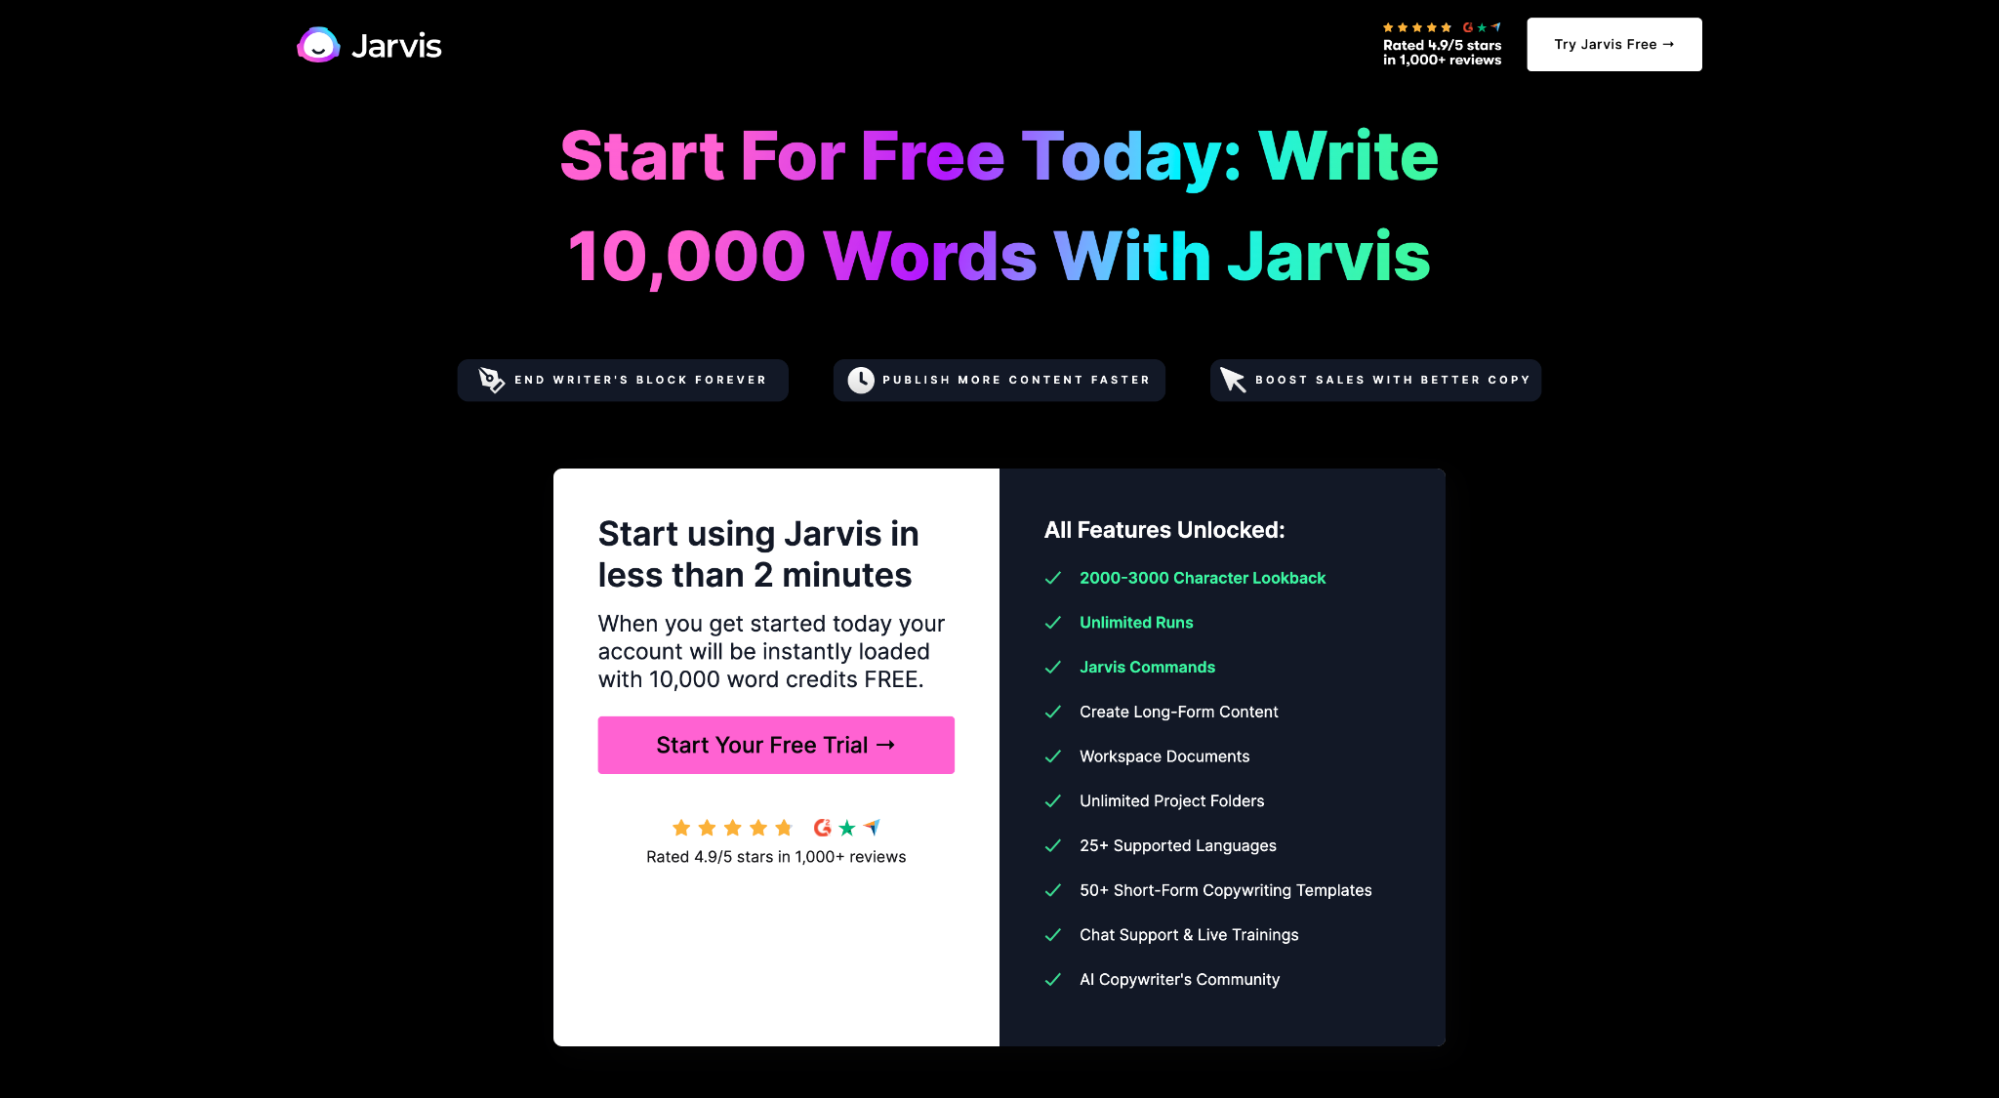 Jarvis offer